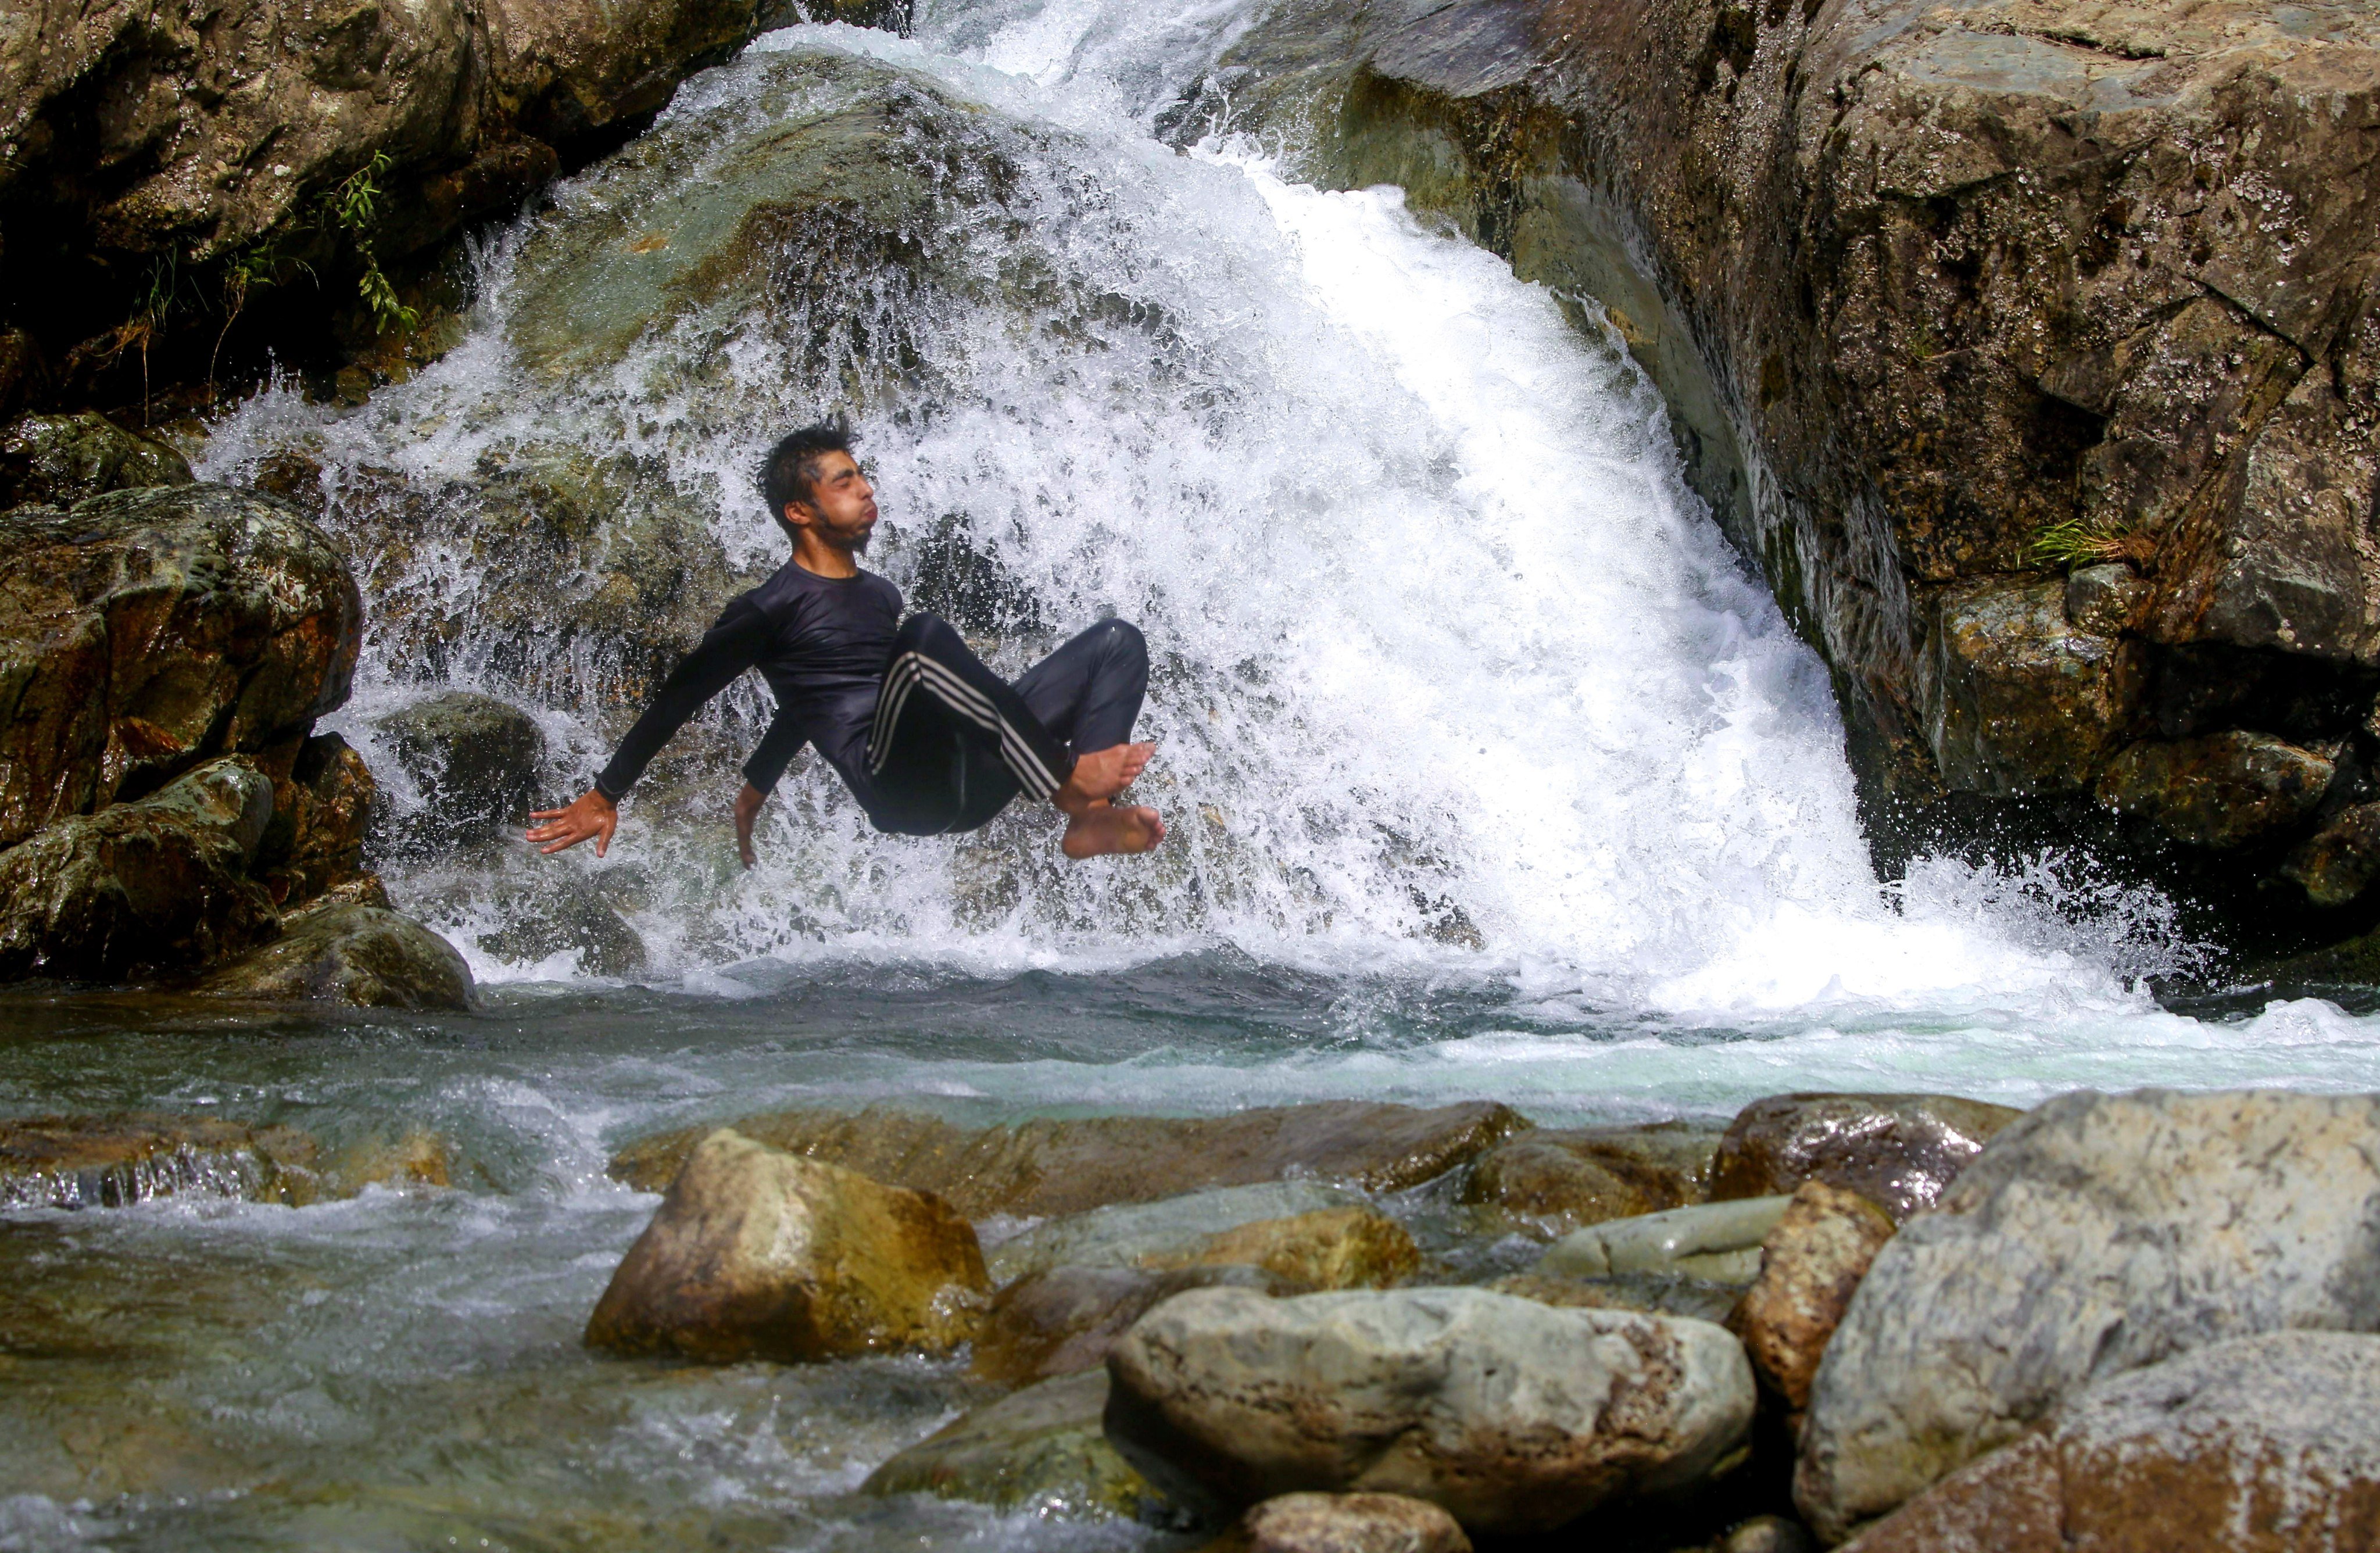 A Kashmiri teenager jumps into a stream to beat the heat on the outskirts of Srinagar, India, on July 5. Photo: EPA-EFE